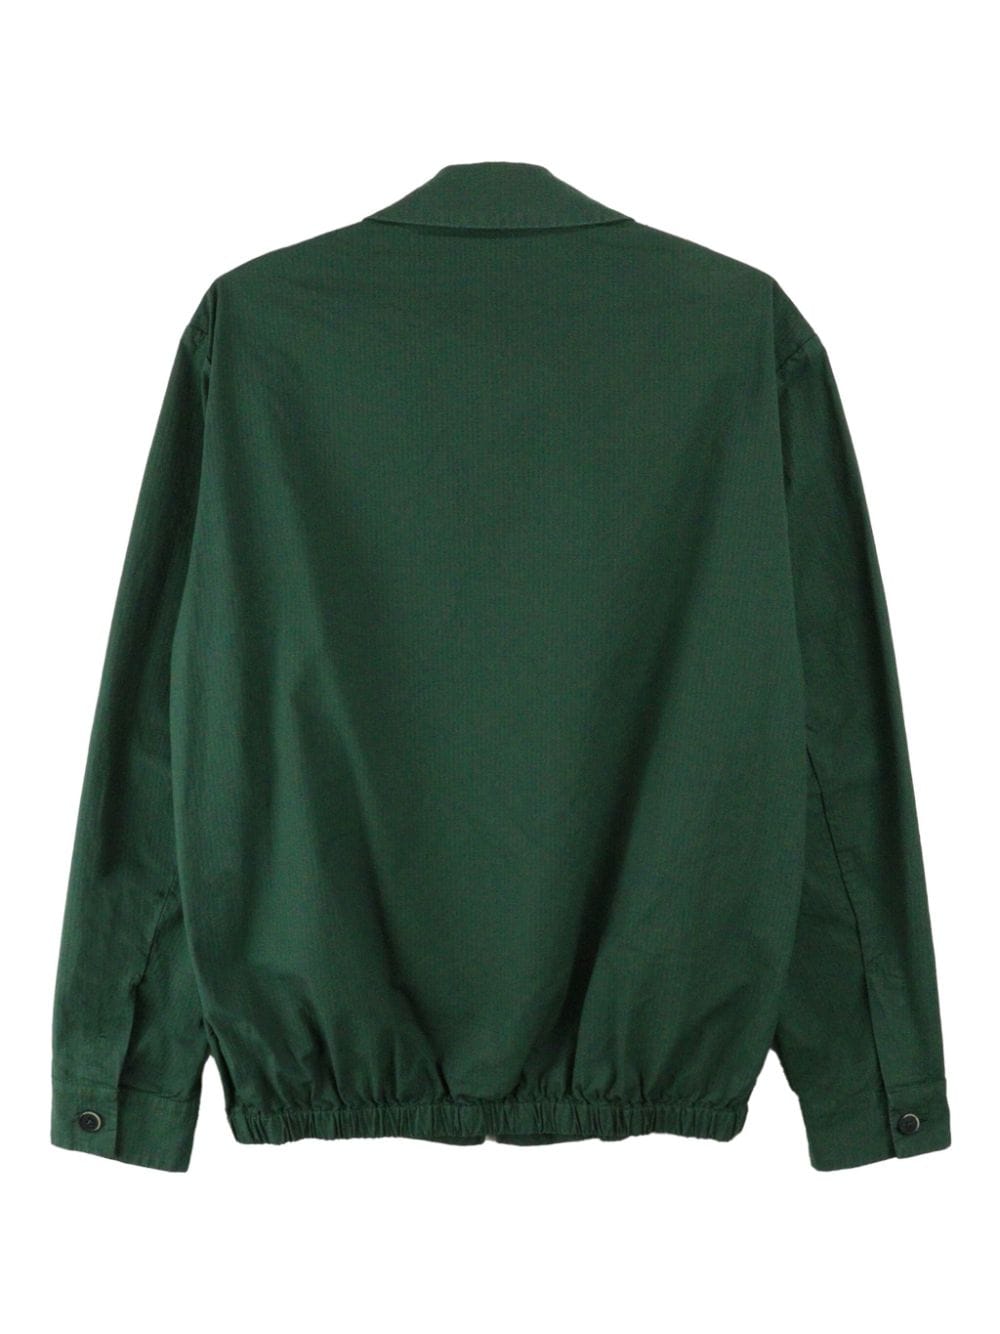 Image 2 of Barena Zaleto Mariol zip-up shirt jacket